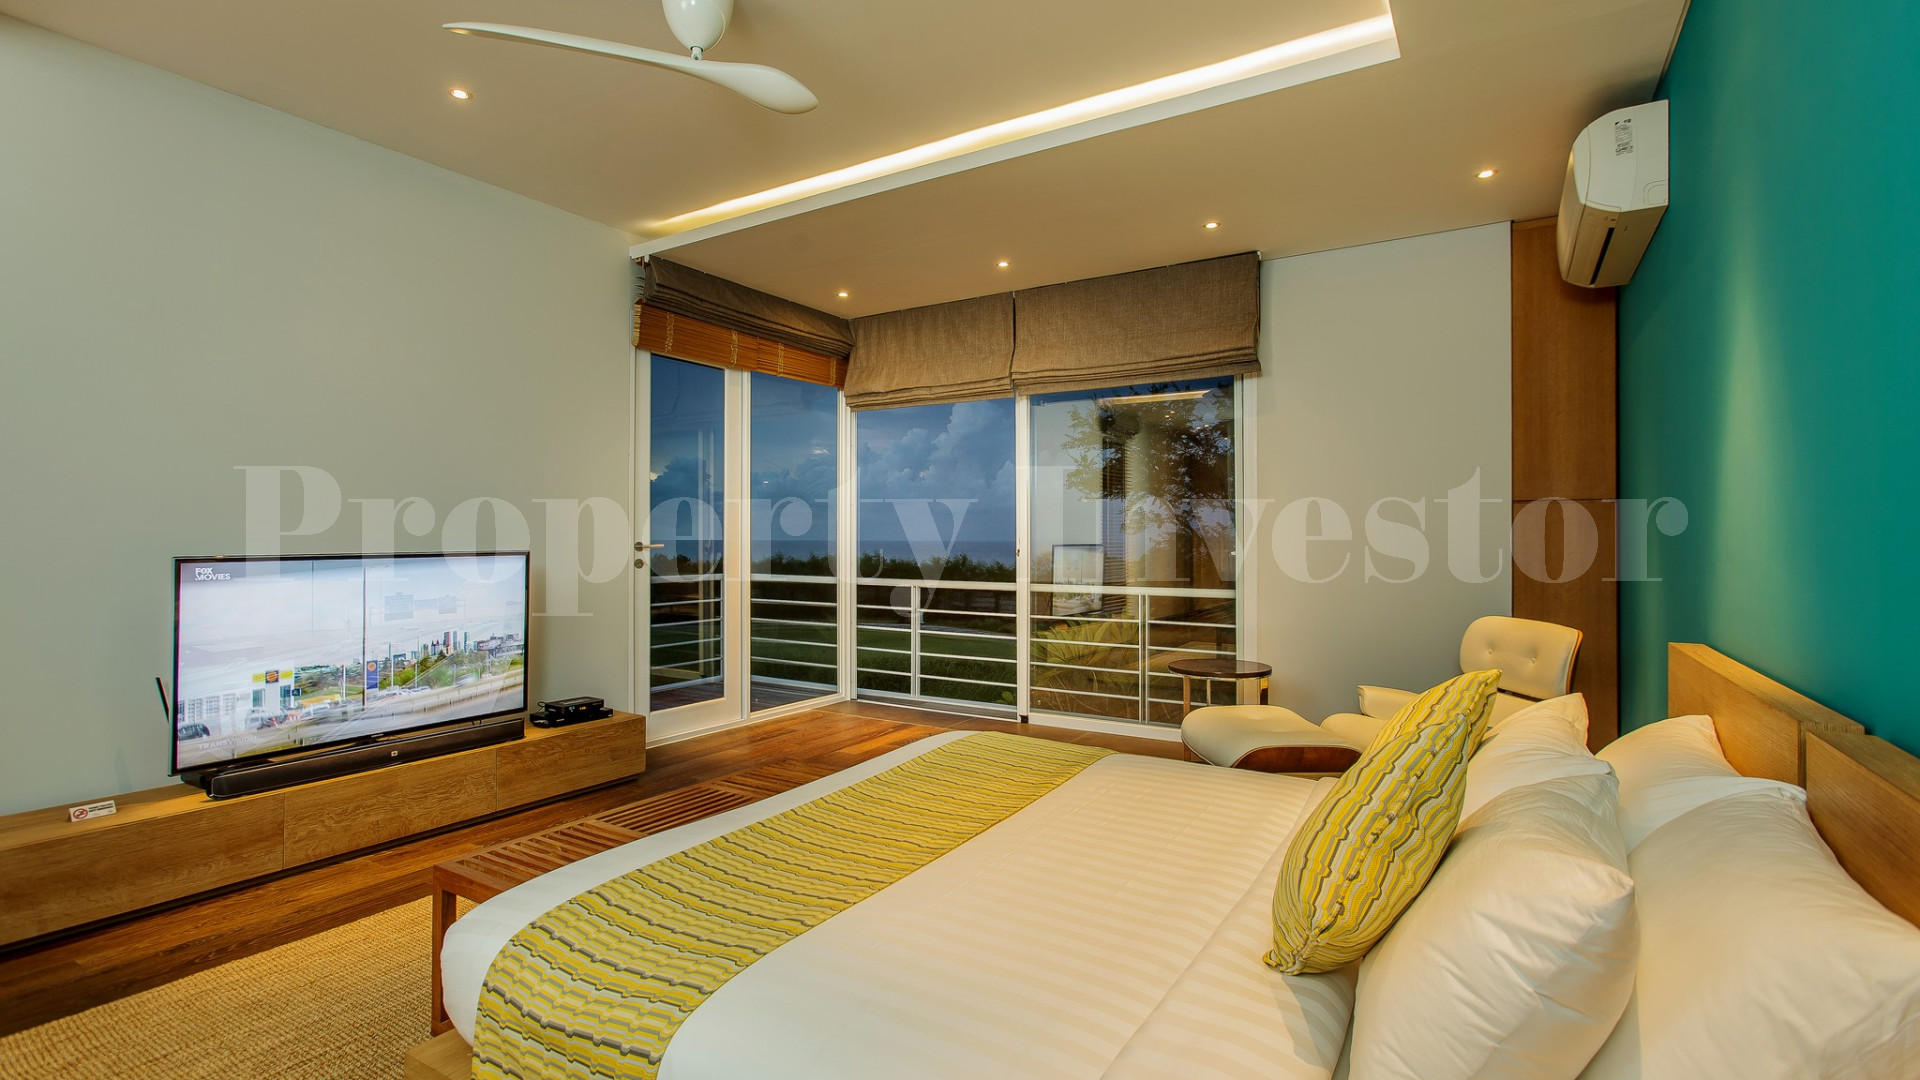 Magnificent 4 Bedroom Luxury Oceanview Villa in Private Gated Golf Community Near Dreamland Beach, Uluwatu, Bali